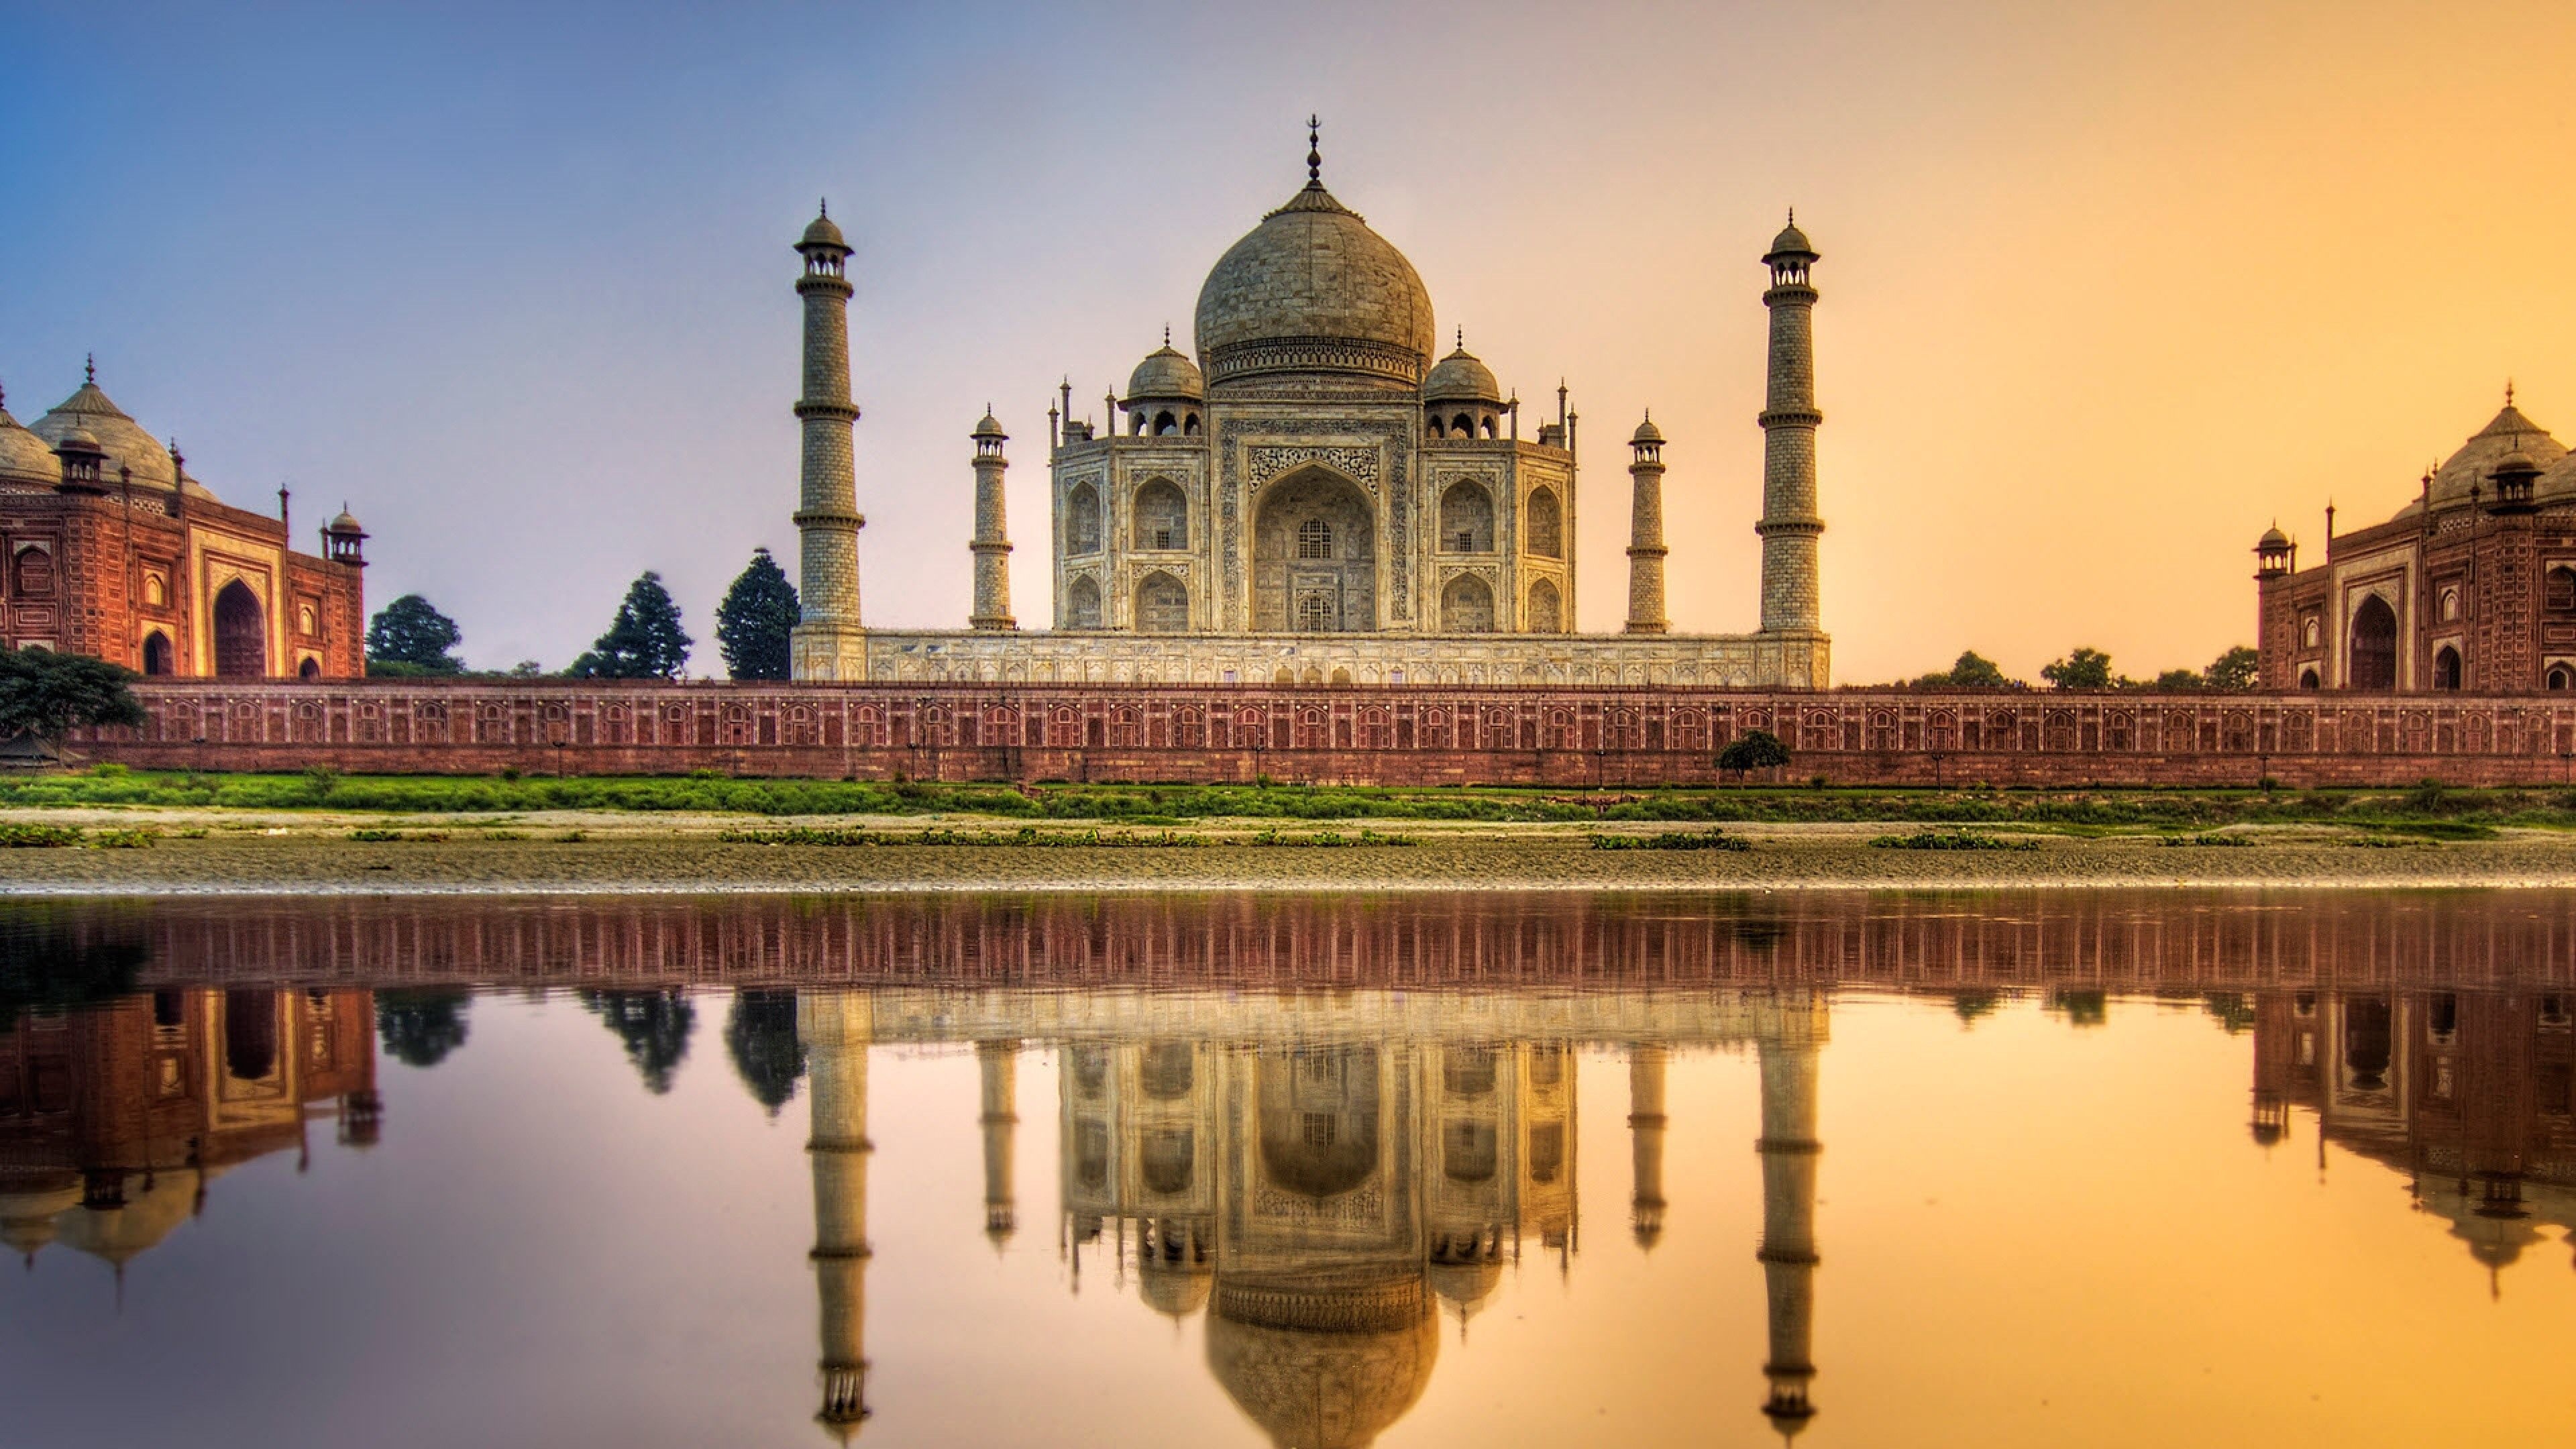 Preview wallpaper, Mausoleum, Travel photography, Taj Mahal, 3840x2160 4K Desktop